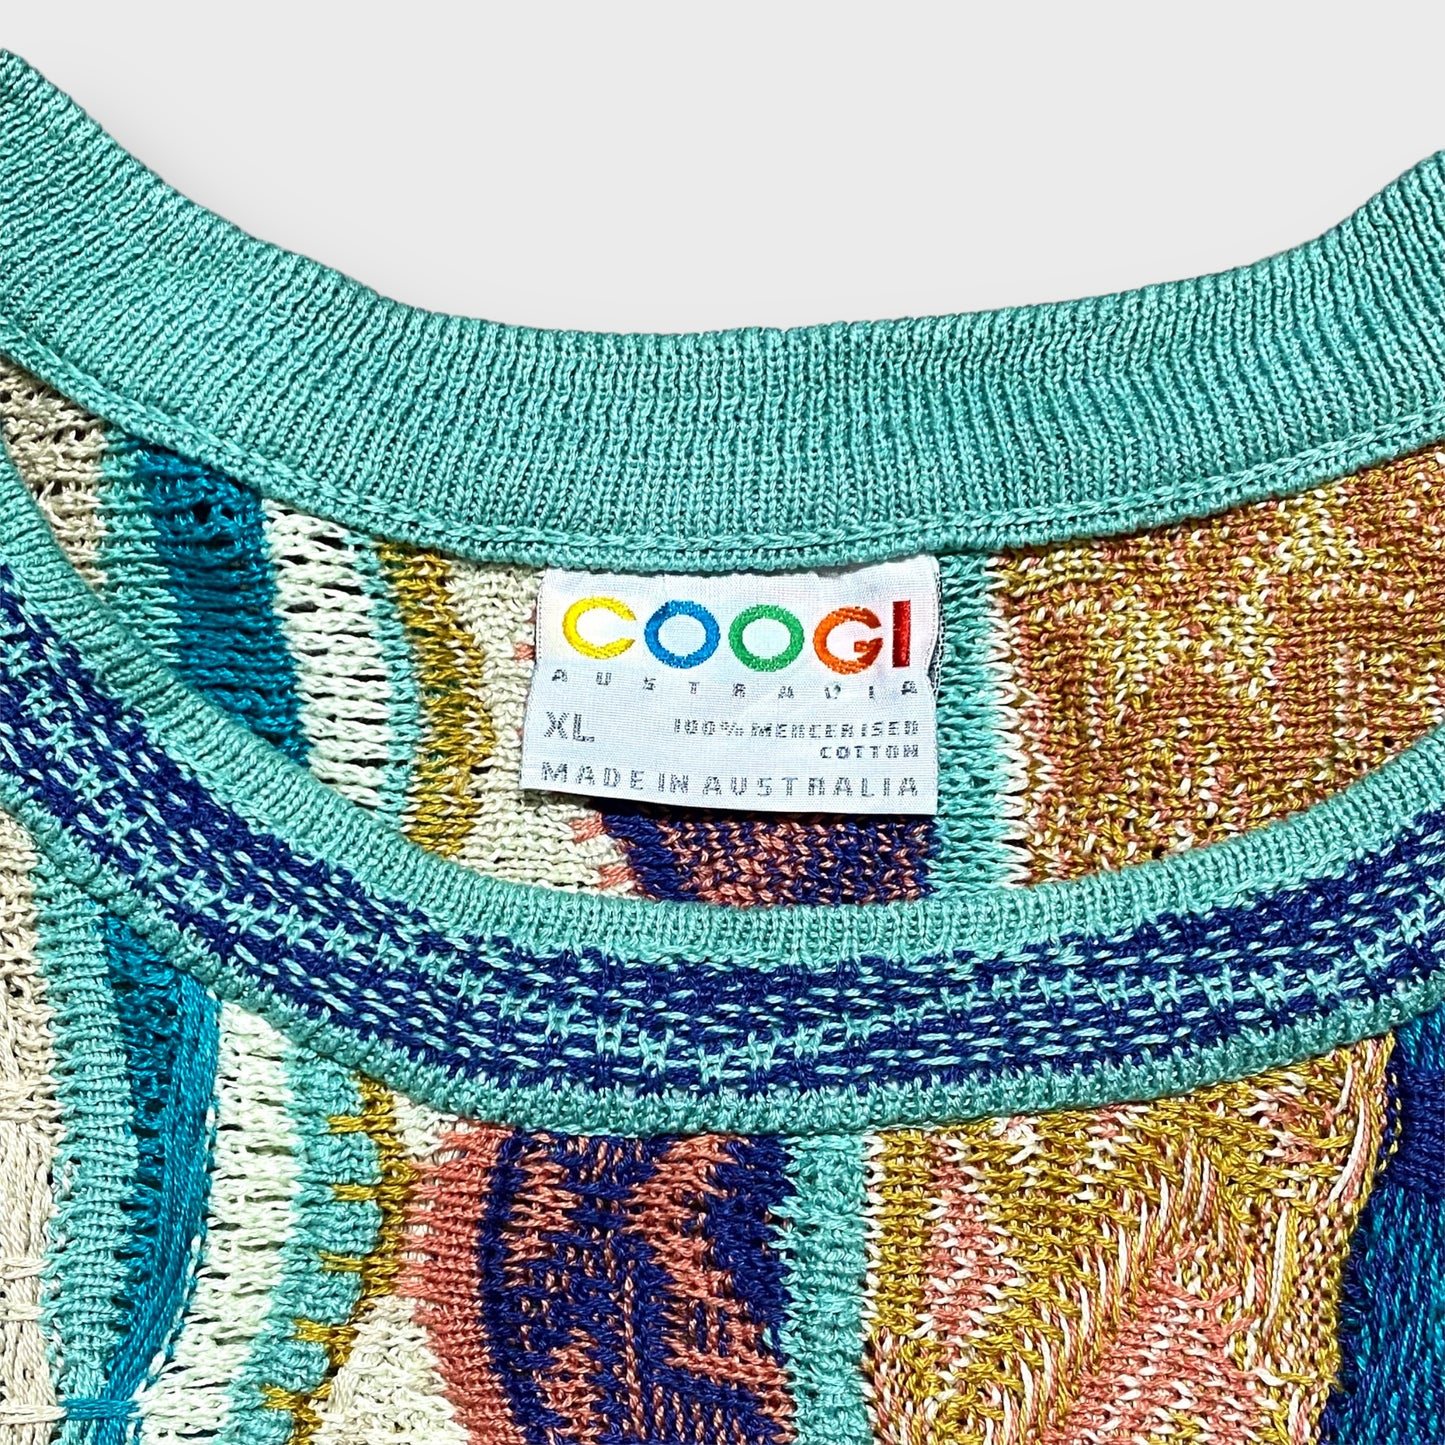 90's "COOGI" 3D knit sweater